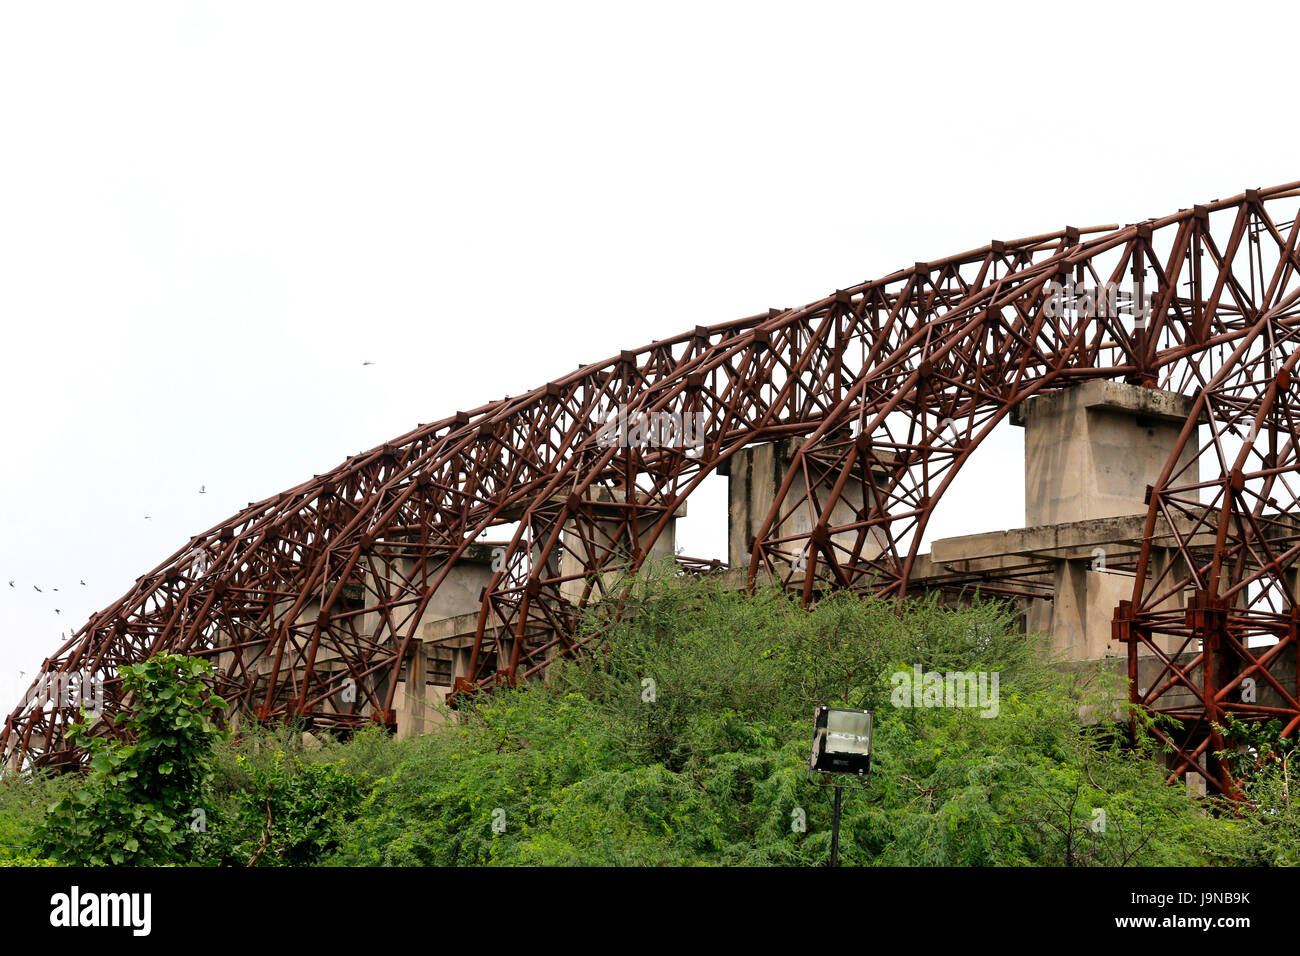 A rusted iron framework above stadium architectural form showing urbanization Stock Photo